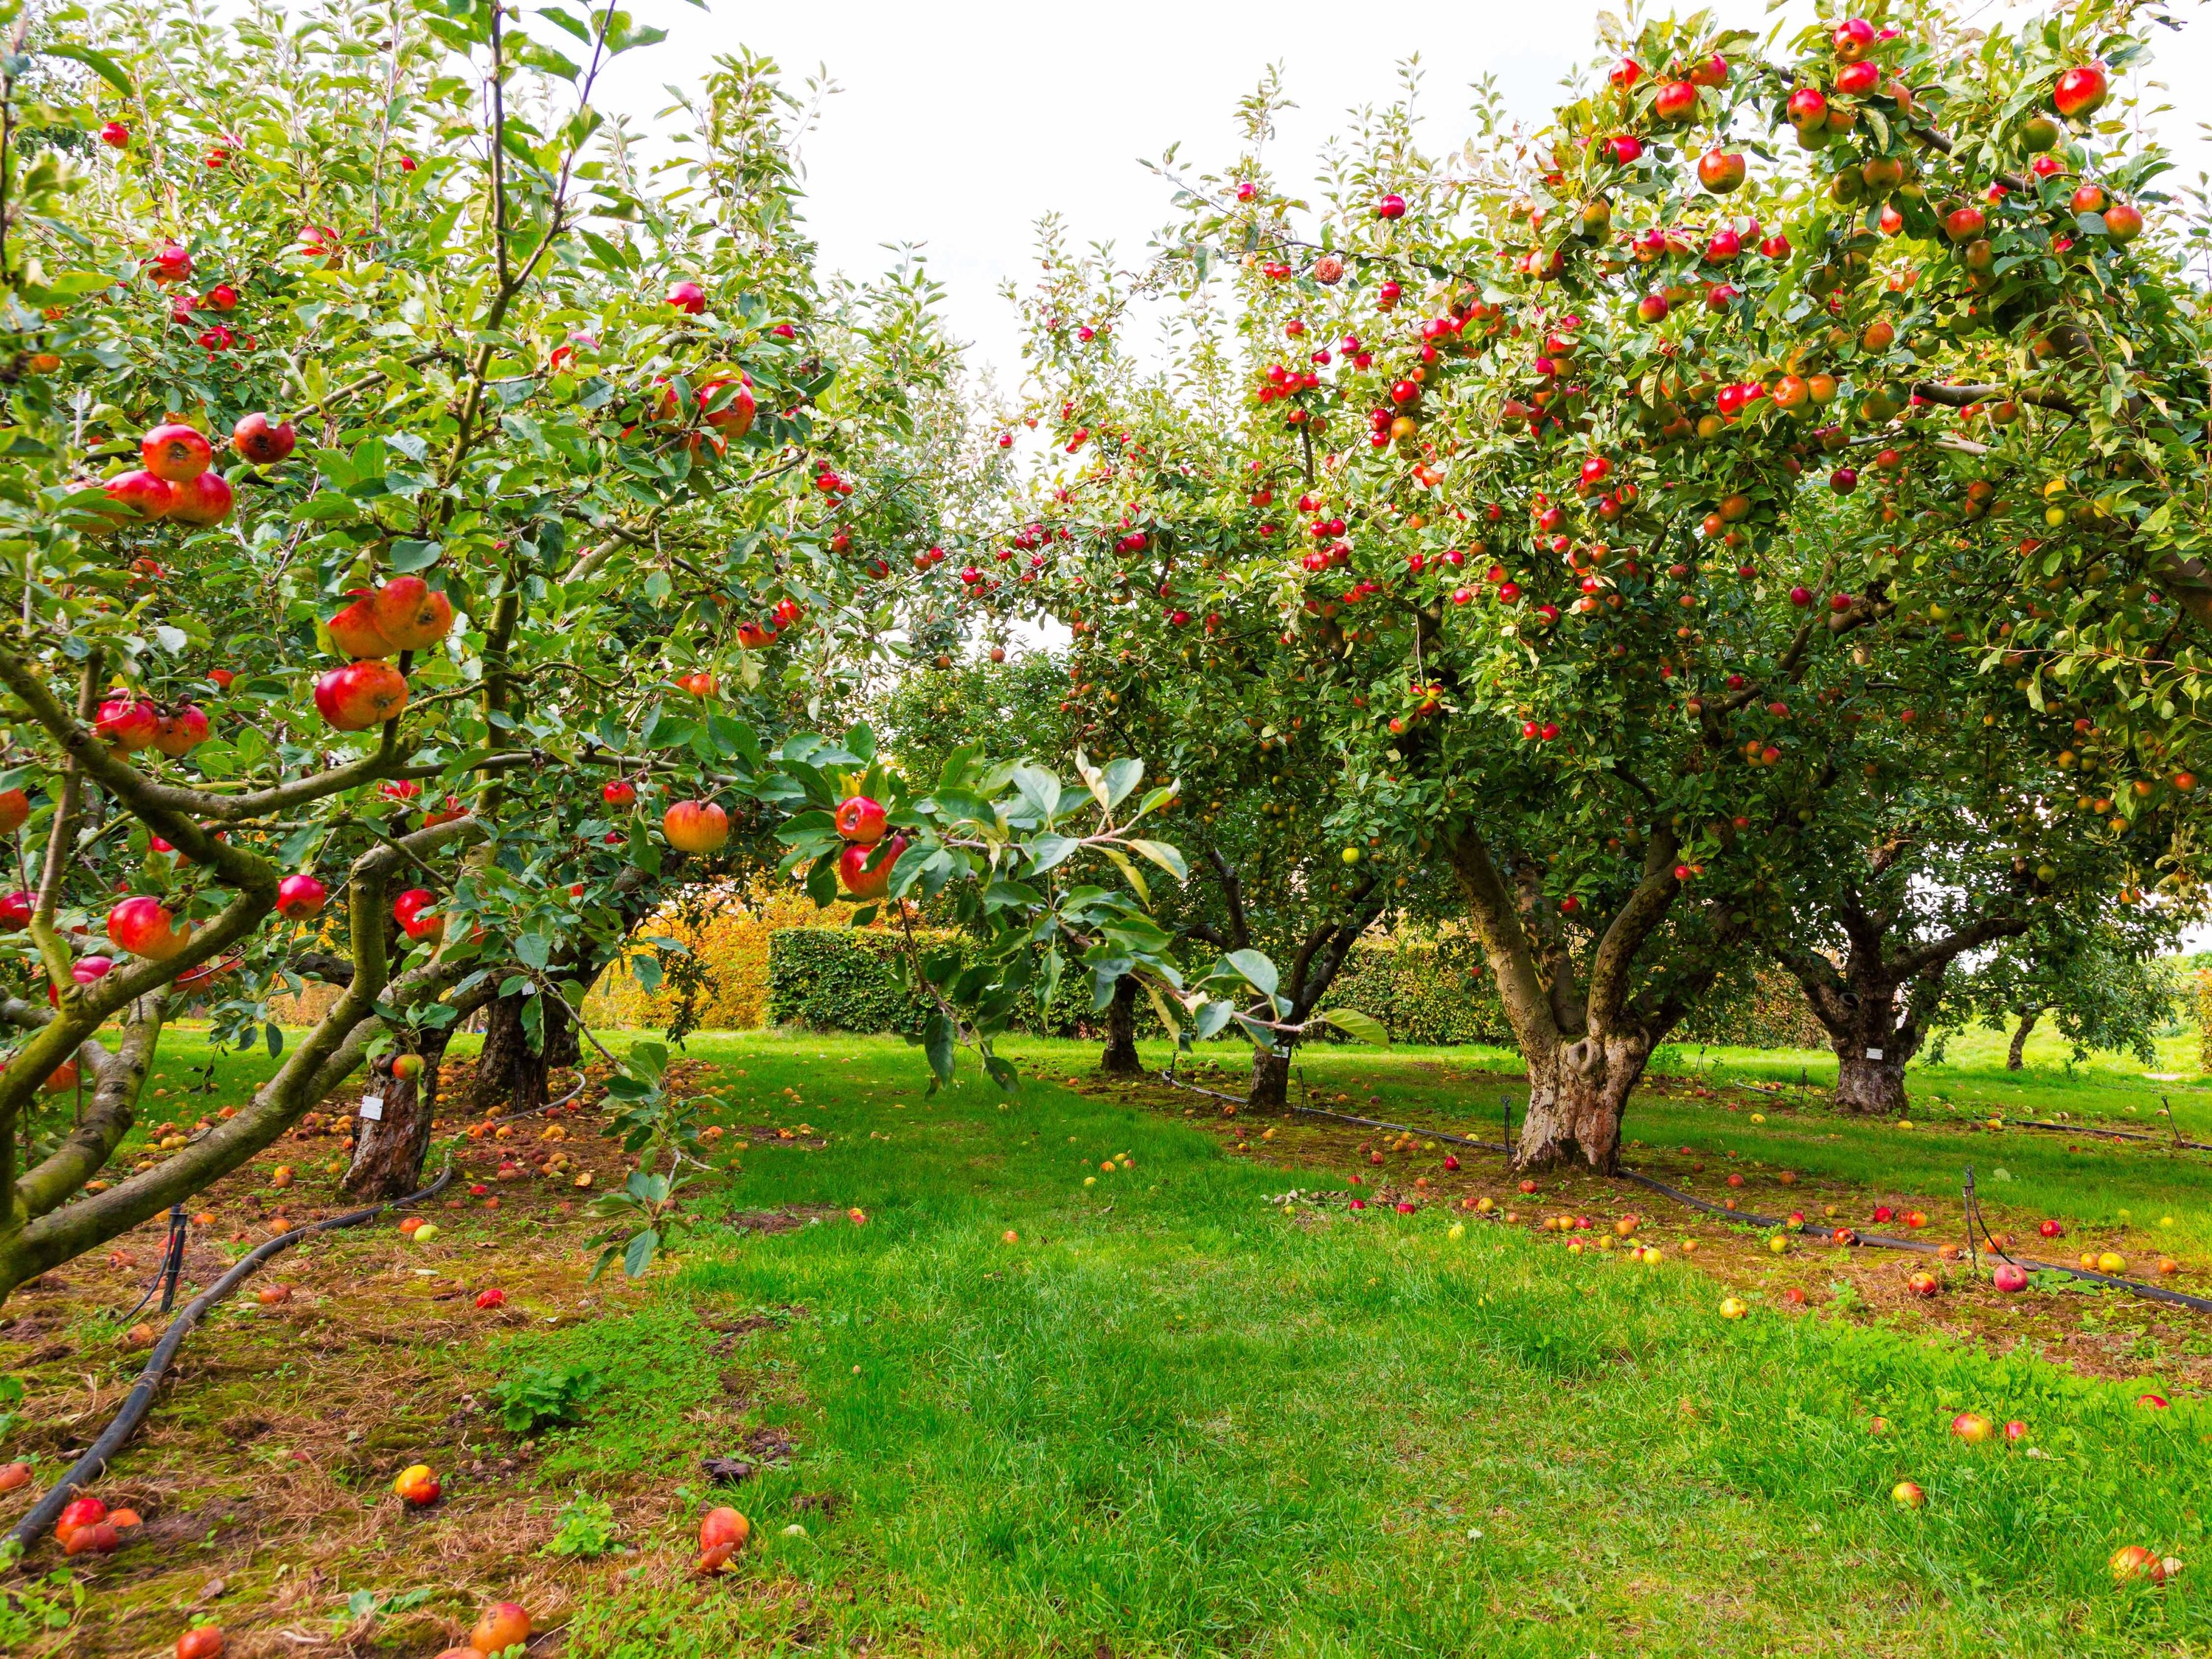 fall apple picking